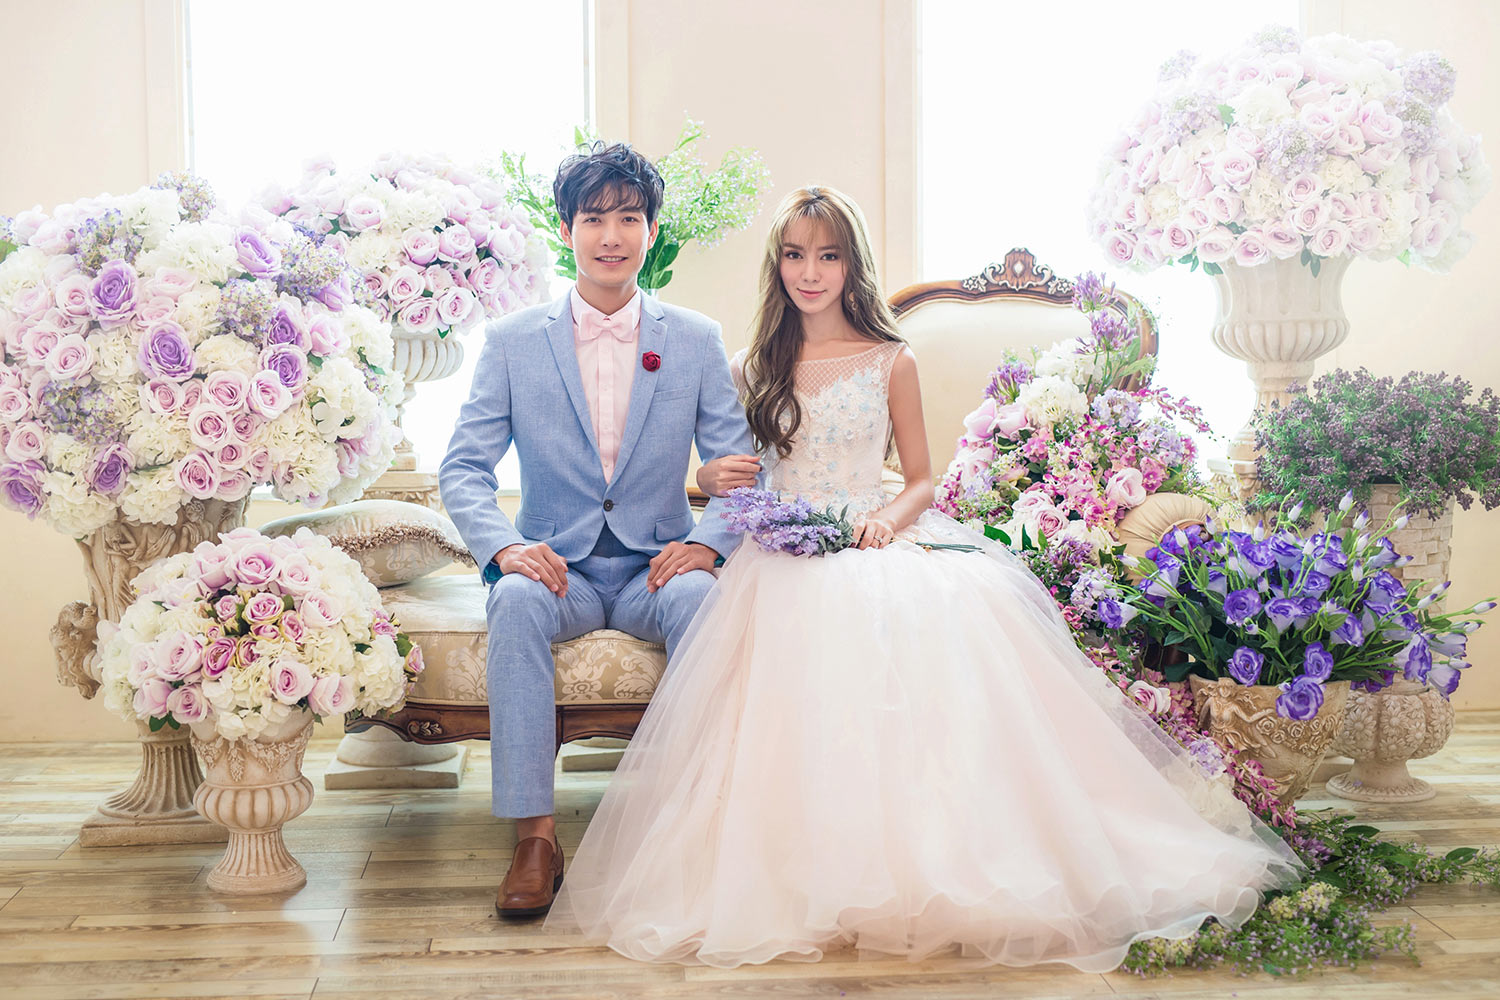 Johor Bahru - My Dream Wedding